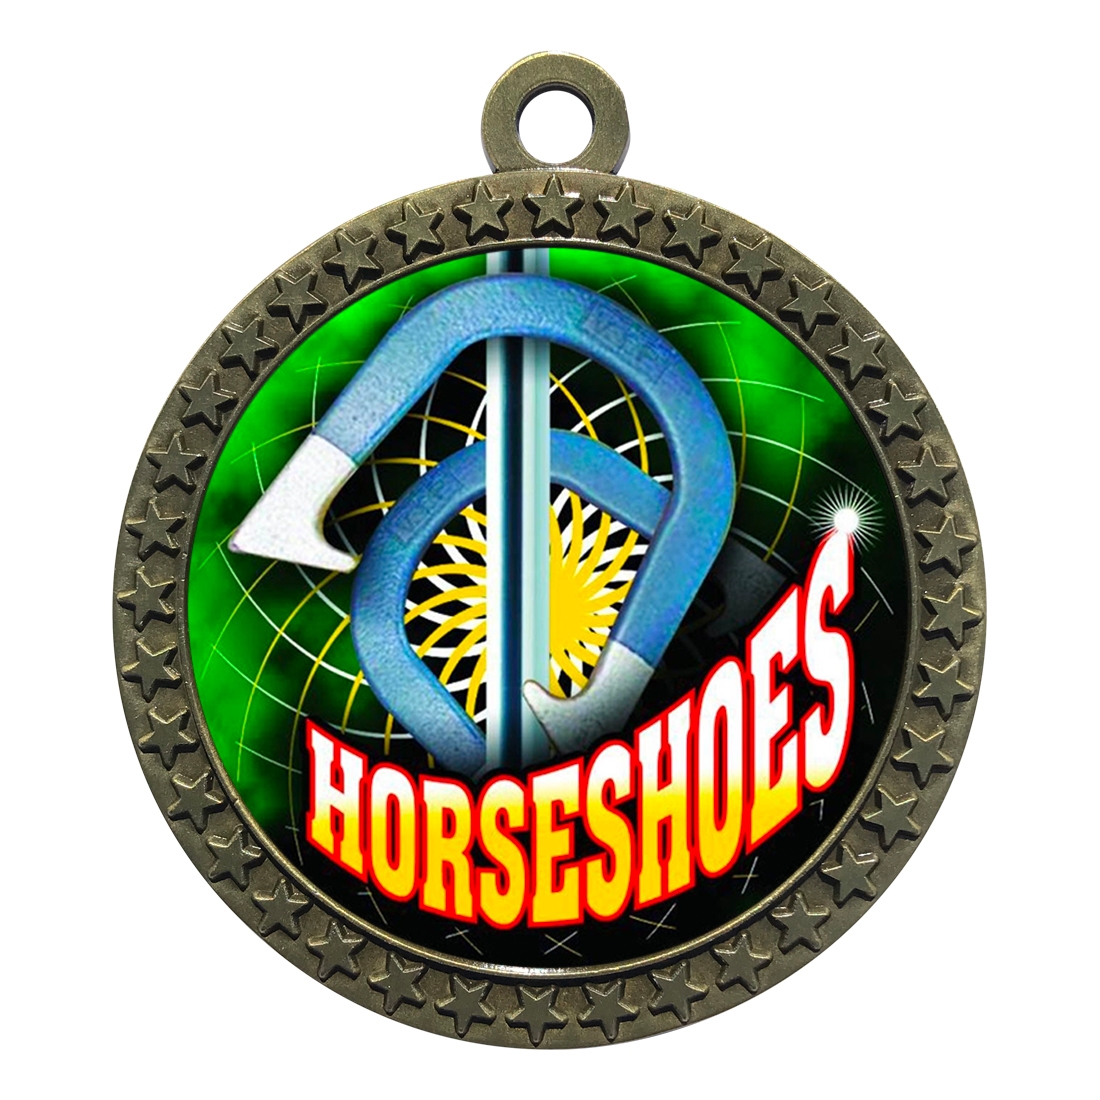 2-1/2" Horseshoes Medal